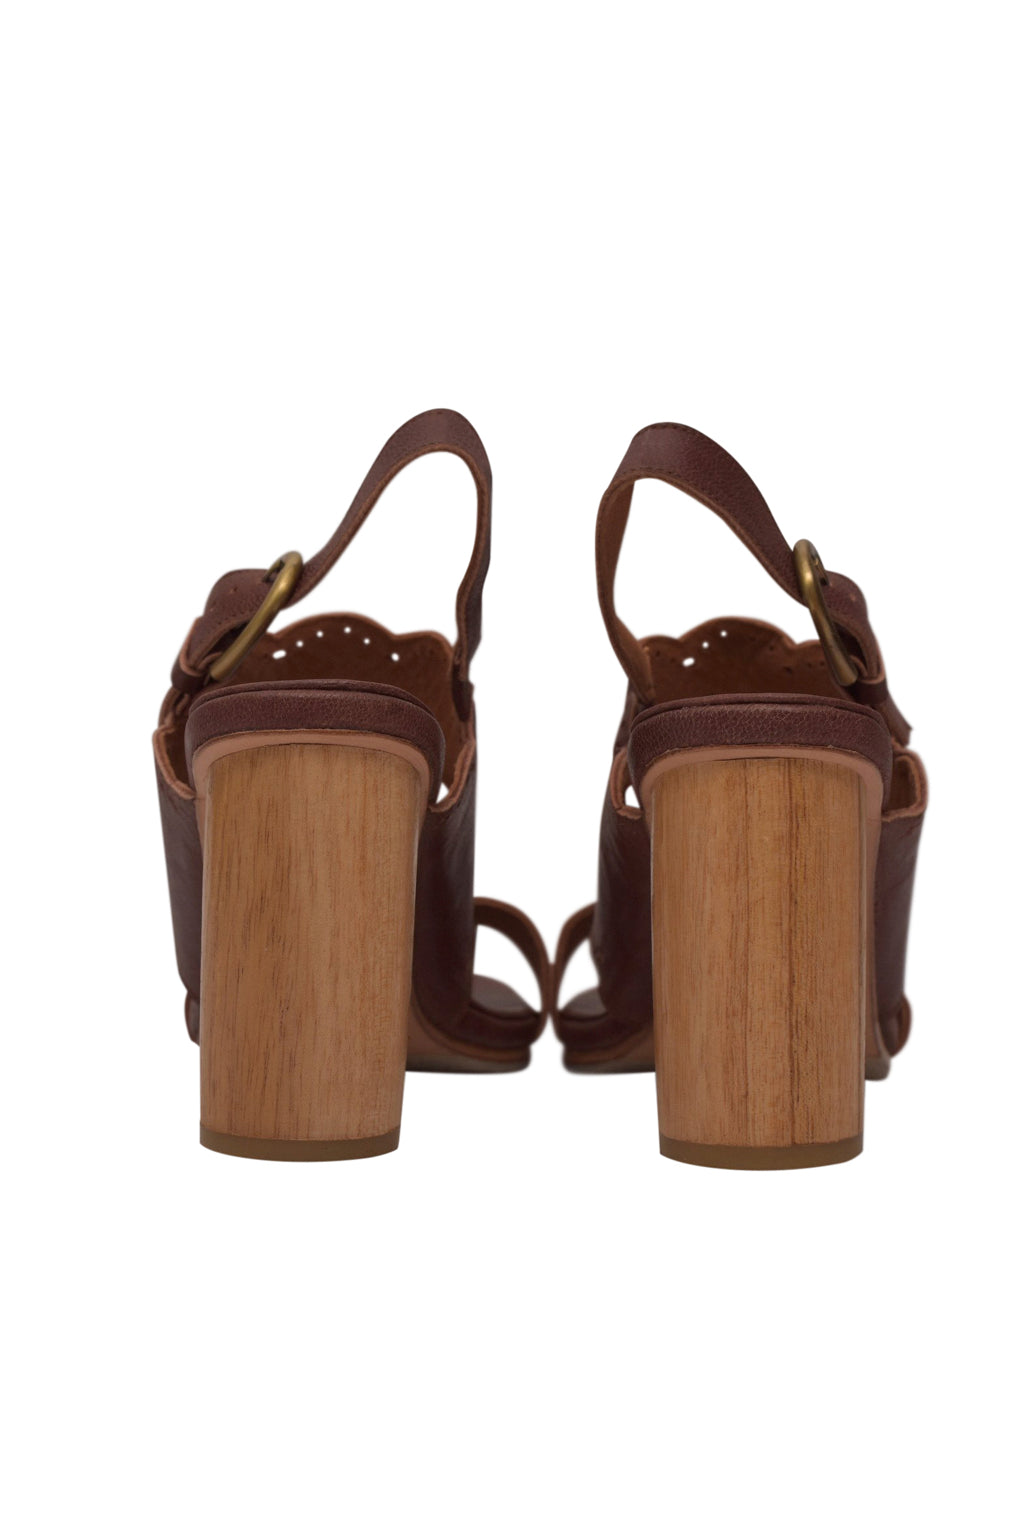 Crystal Glow. Handmade brown leather sandals with wooden heel – ELF